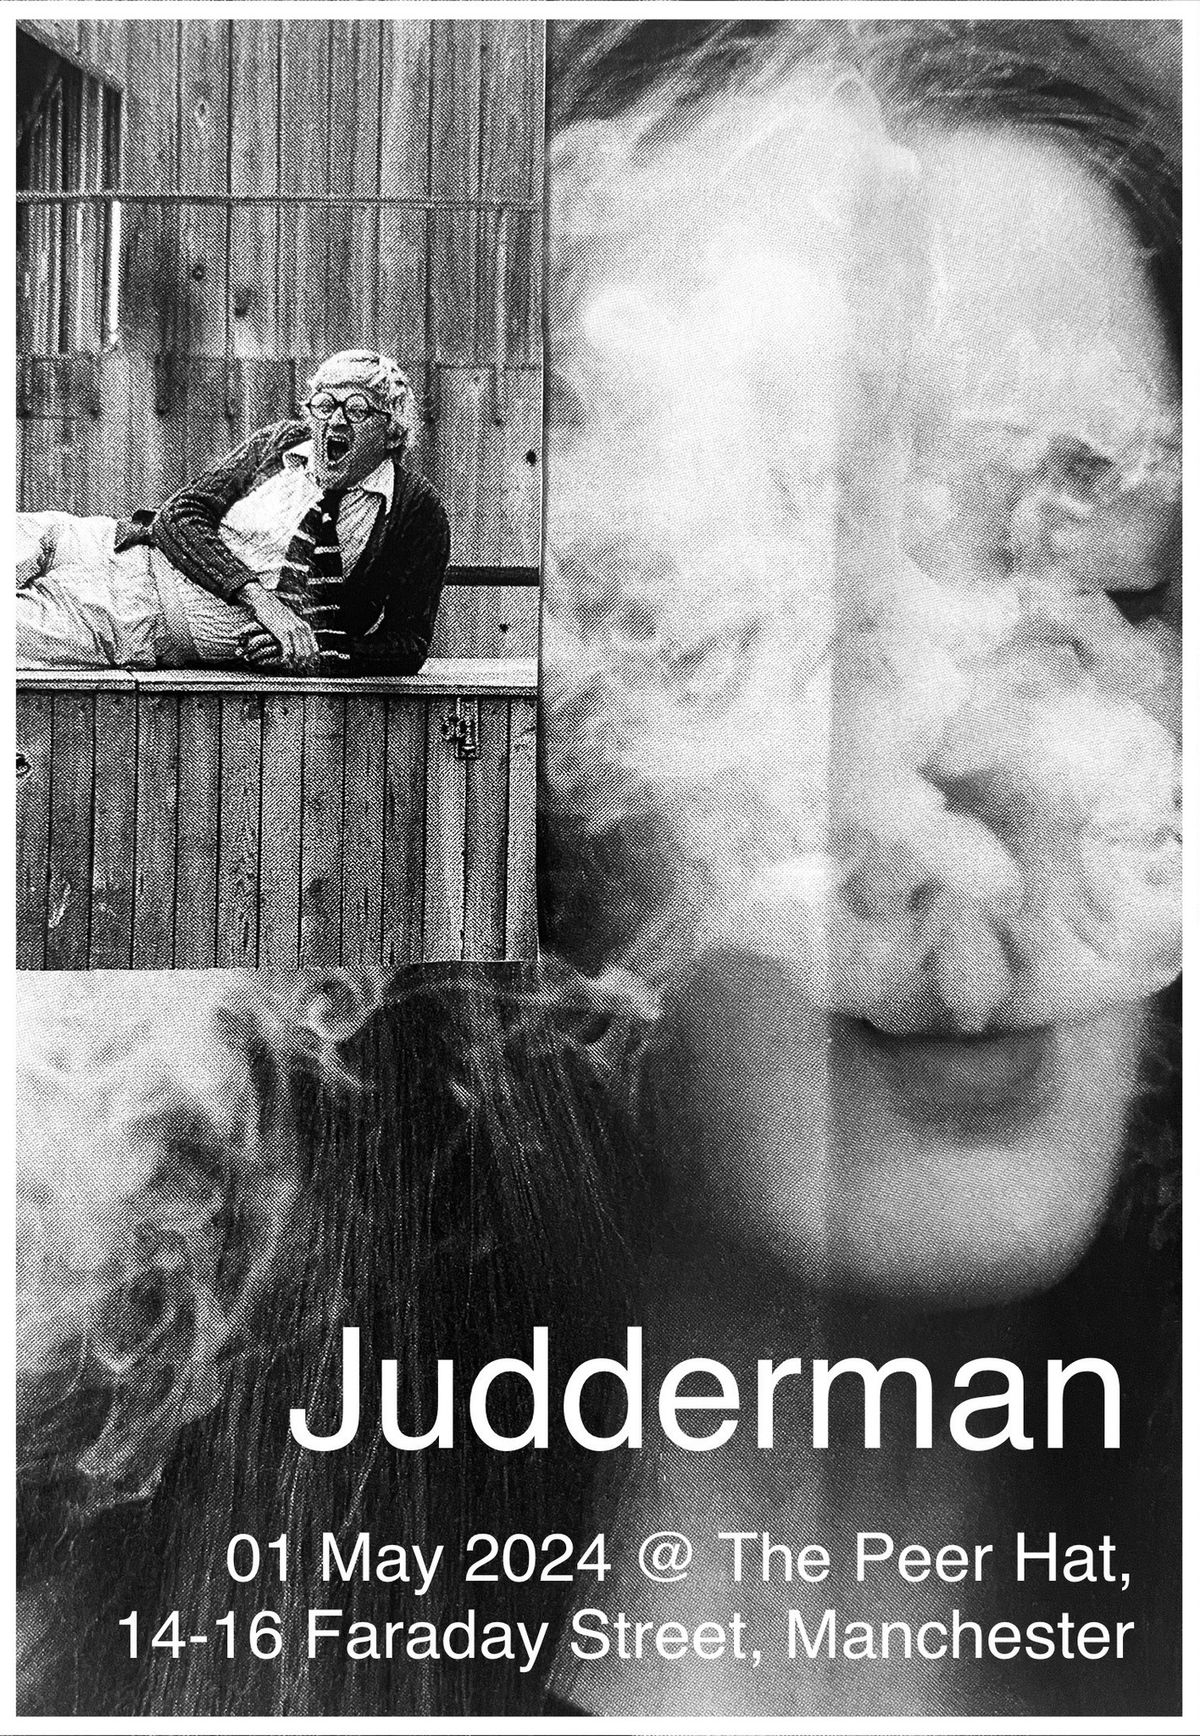 Judderman @ The Peer Hat, 01 May 2024